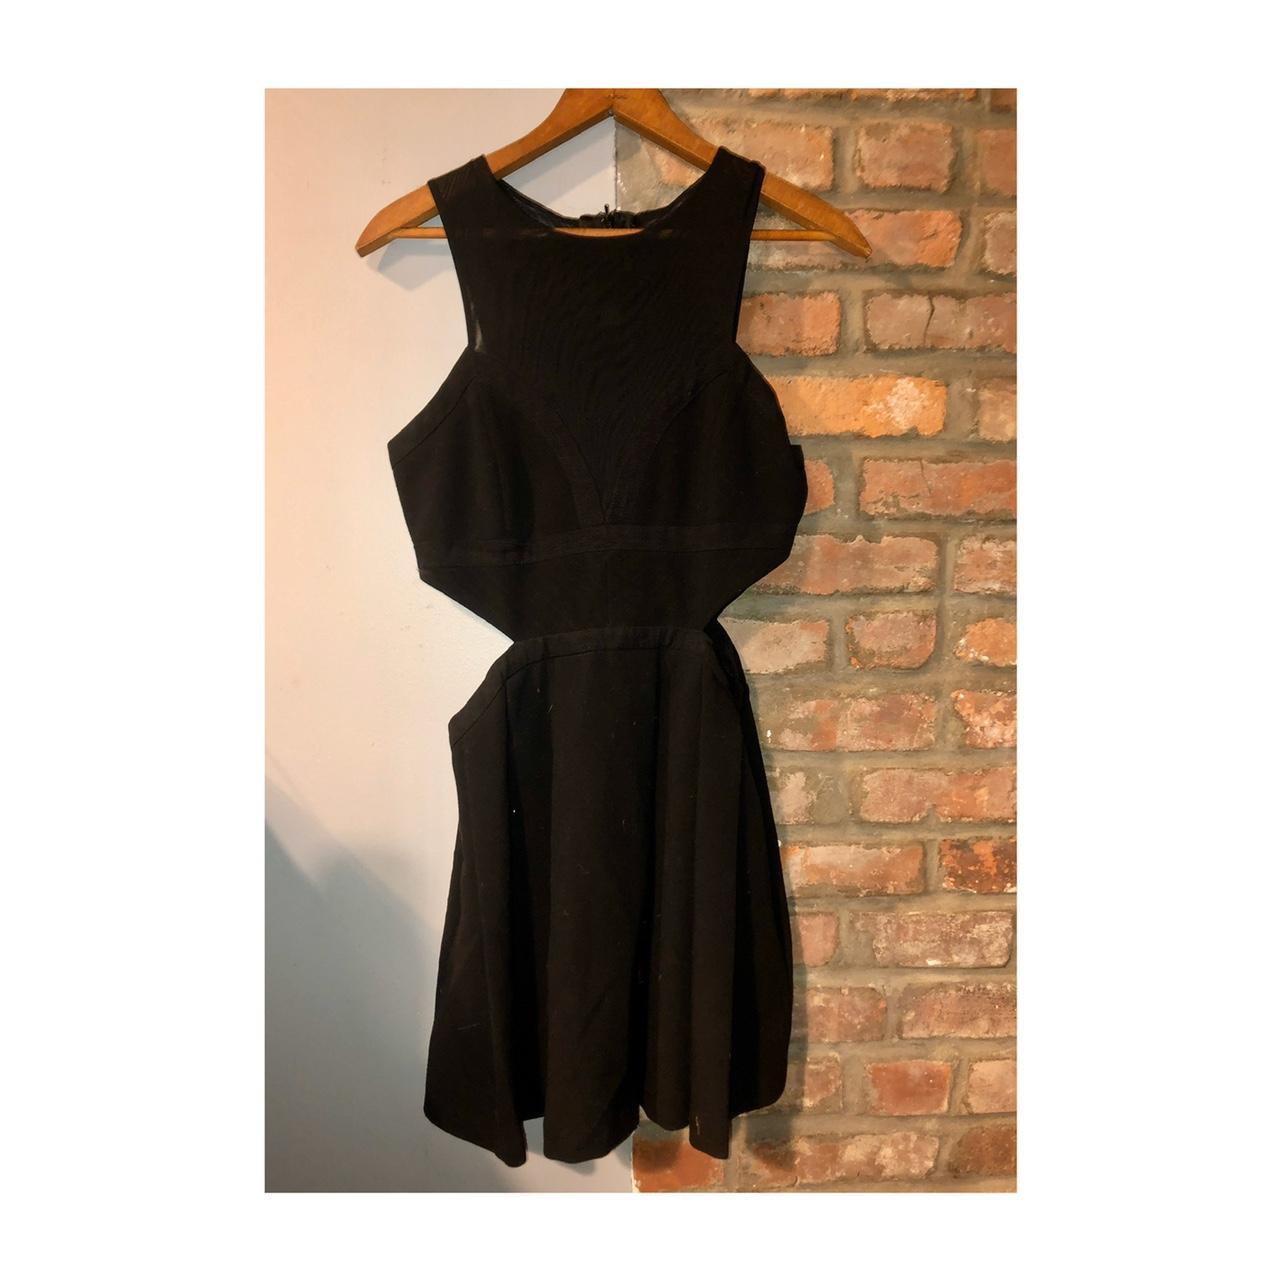 Product Image 1 - Black cut out dress
Sheer v